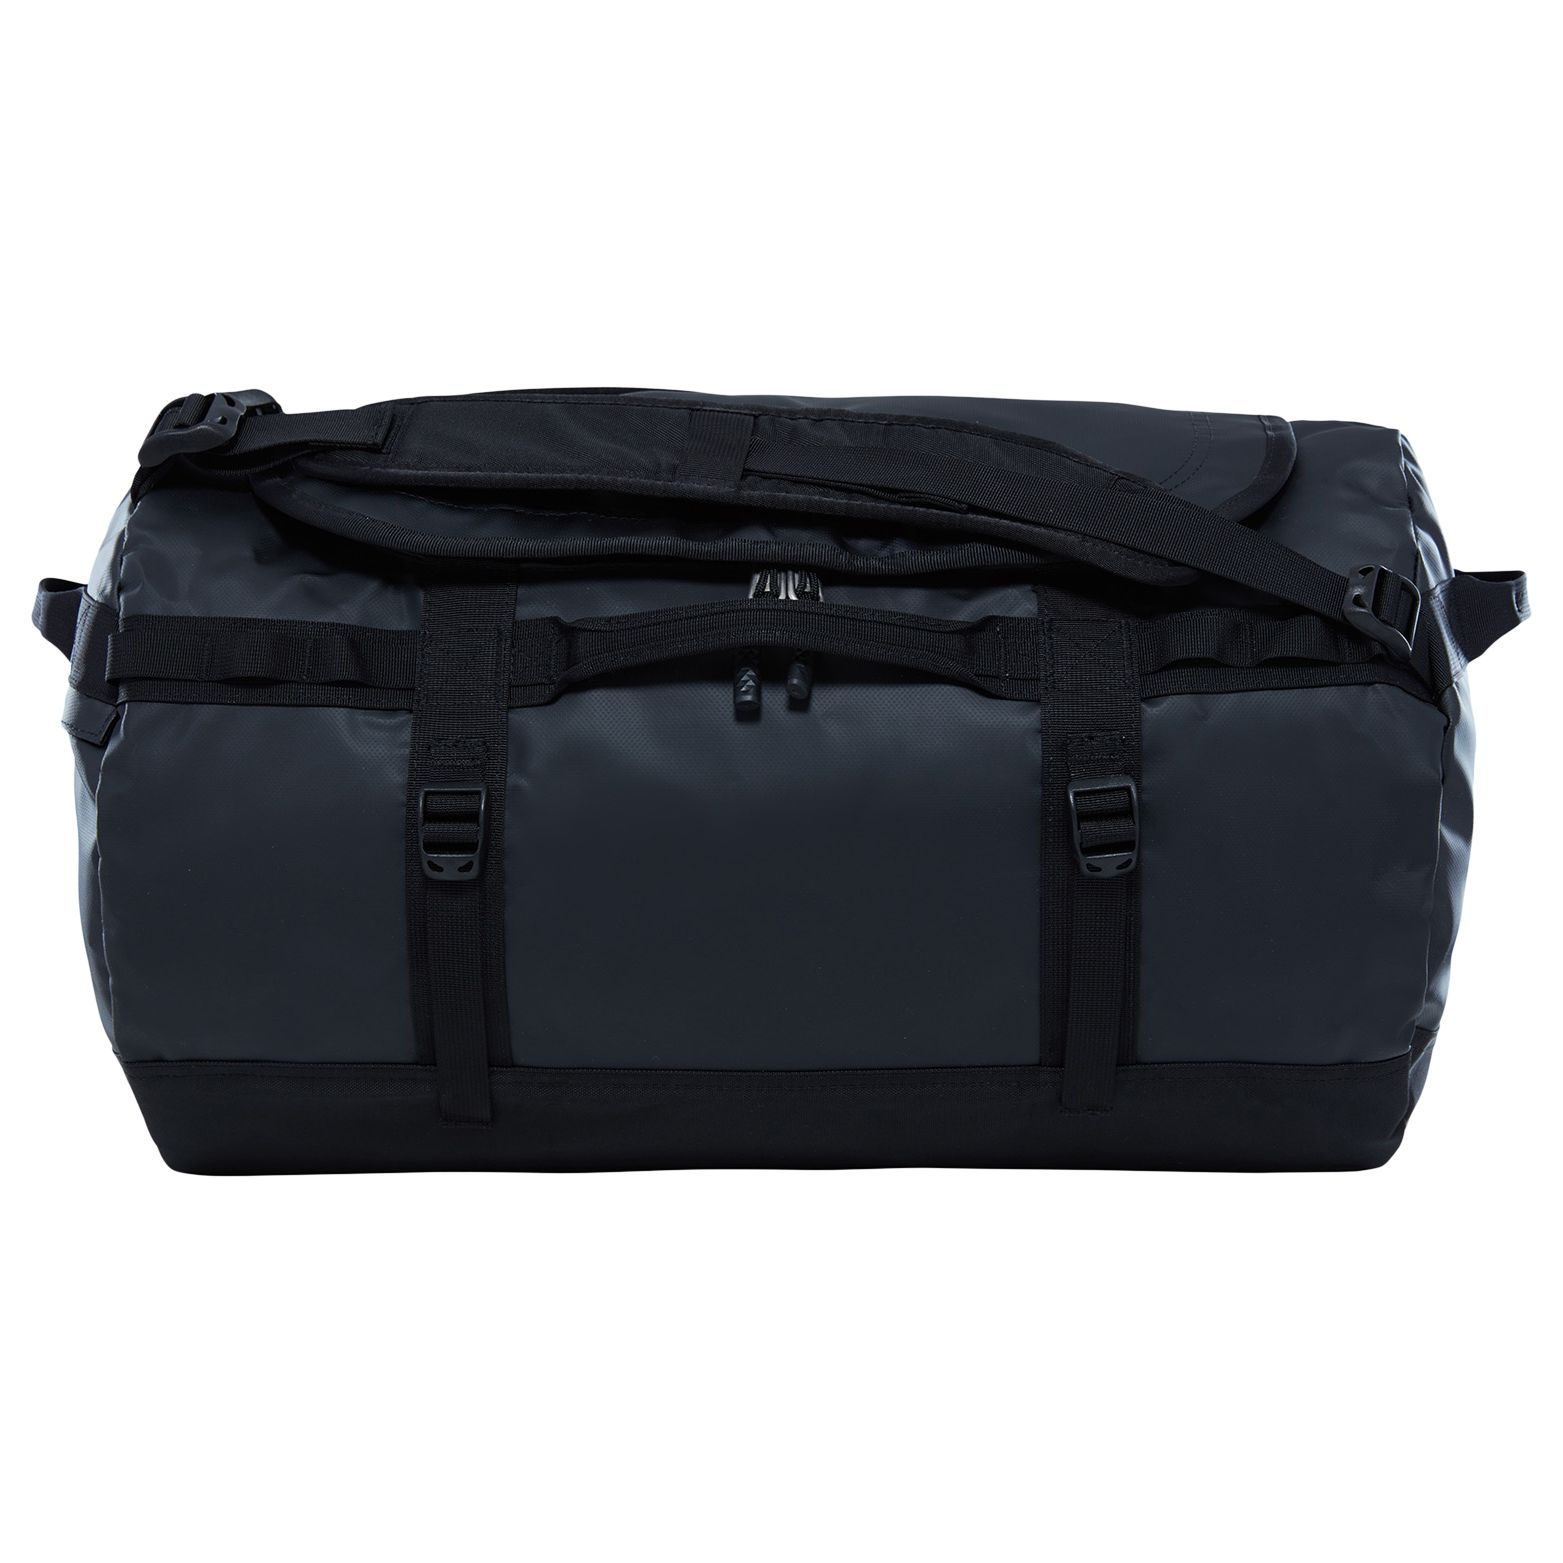 MERCURY NCAA Heavy Duty College Bag Duffel 27” Large Duffle Bag Gym Bag Tote Sport Bag Travel Bag with College Team Logo 